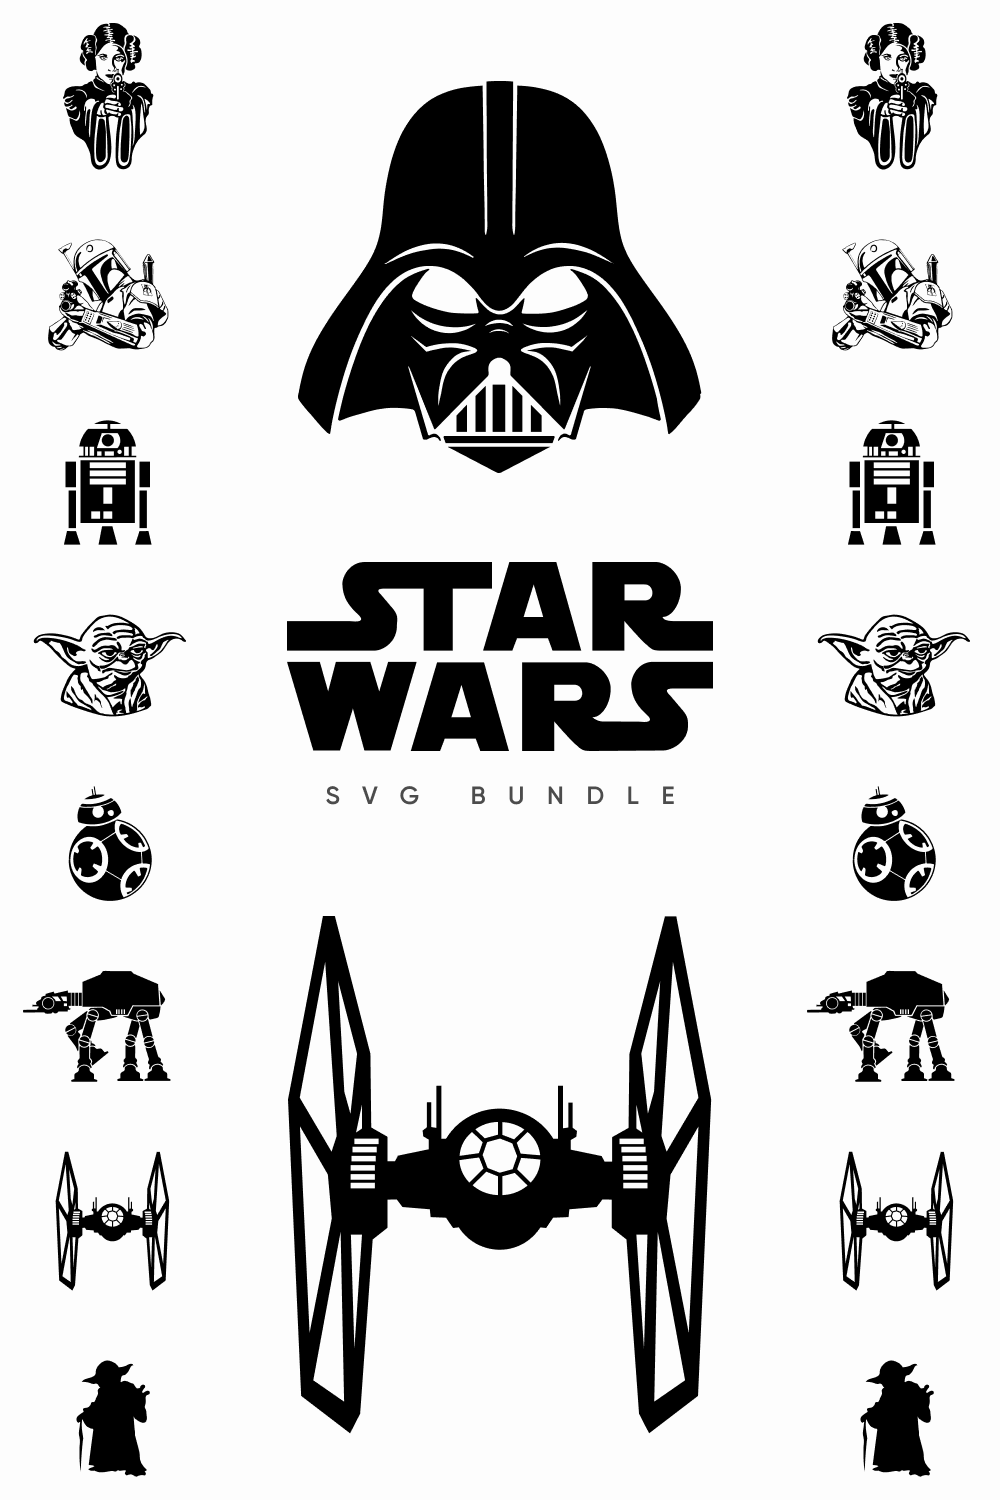 Star Wars SVG Collection pinterest image.